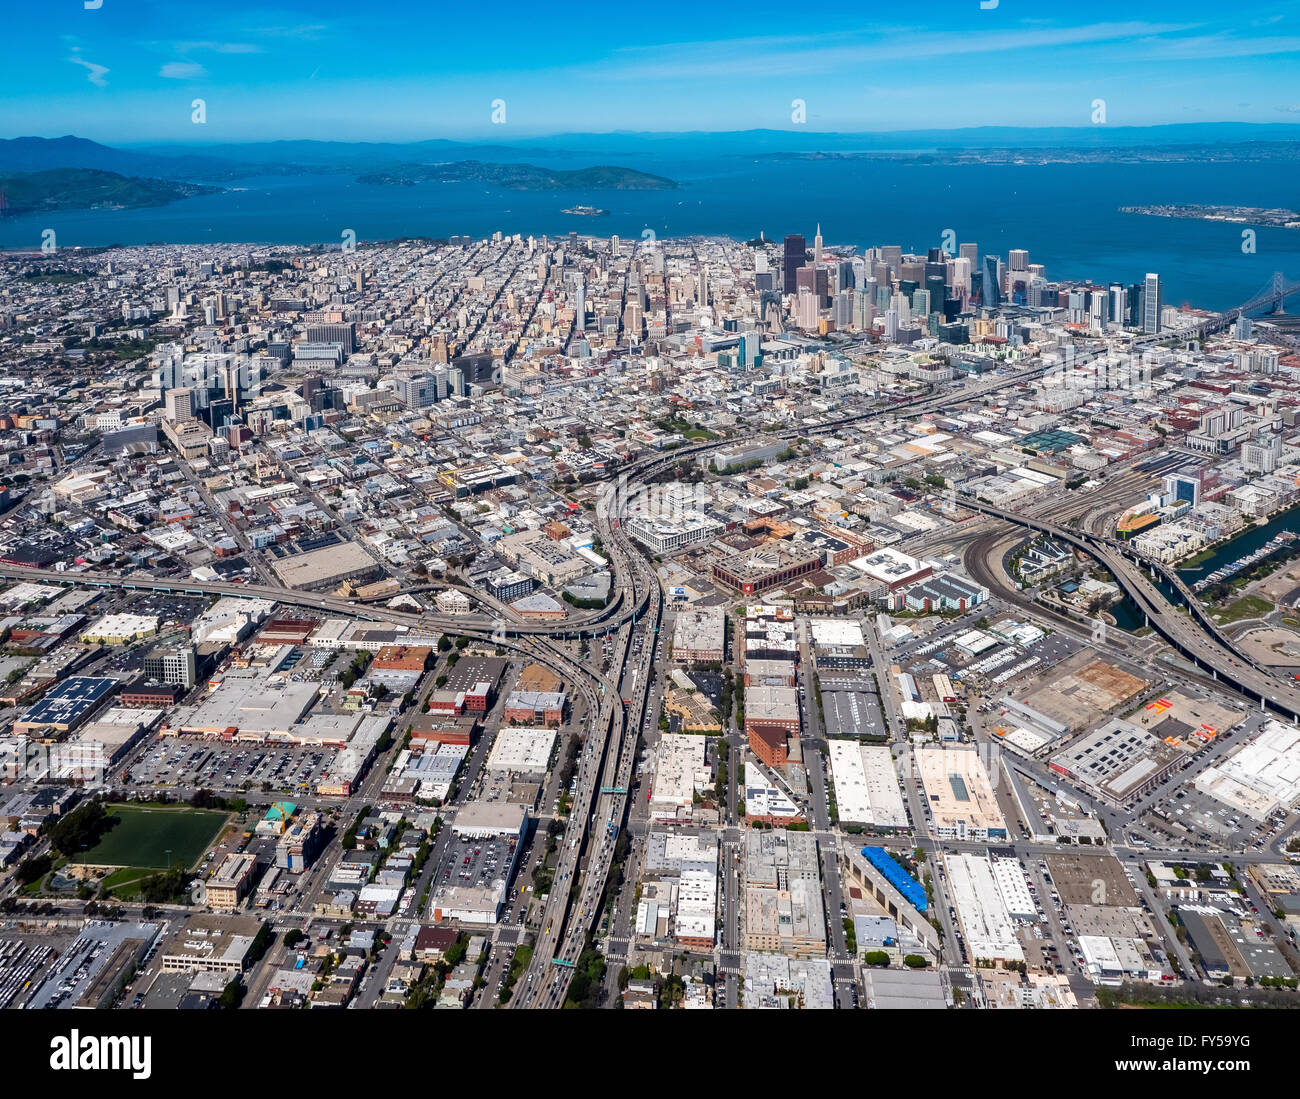 Vista aerea di San Francisco dal sud, sud di San Francisco, San Francisco Bay Area, California, Stati Uniti d'America Foto Stock